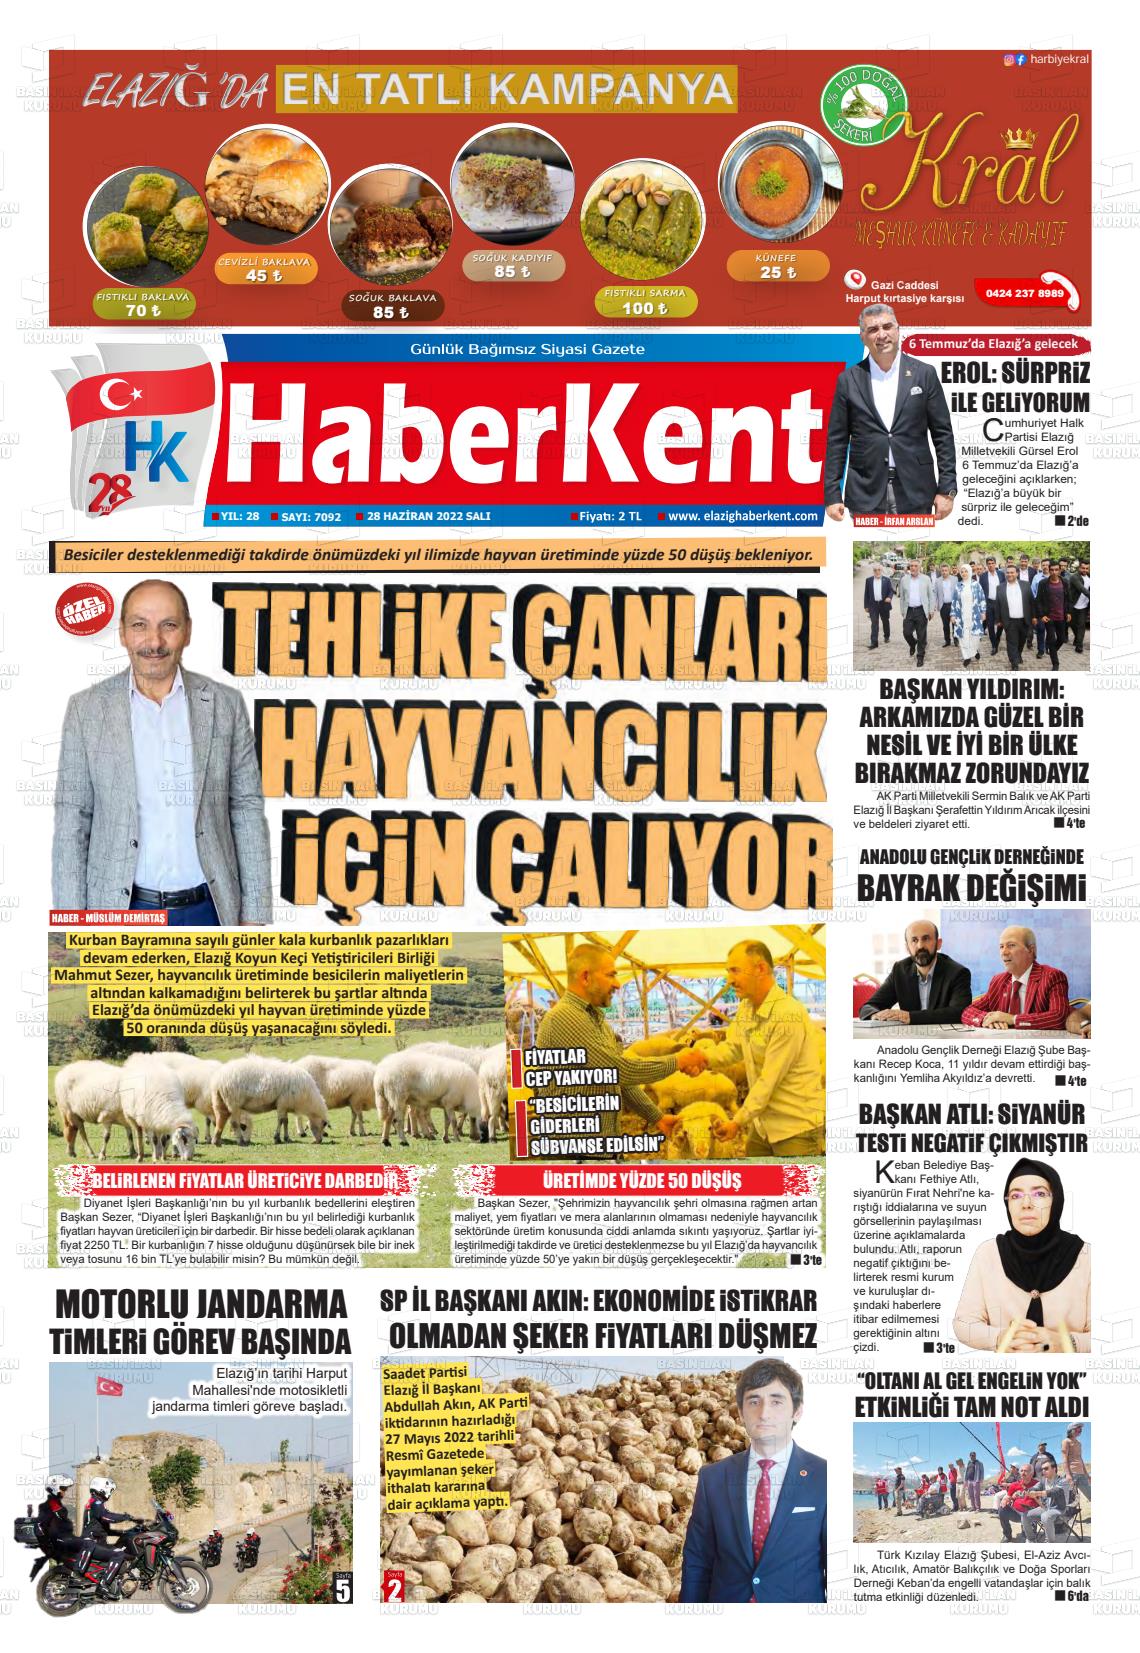 28 Haziran 2022 Elazığ Haberkent Gazete Manşeti